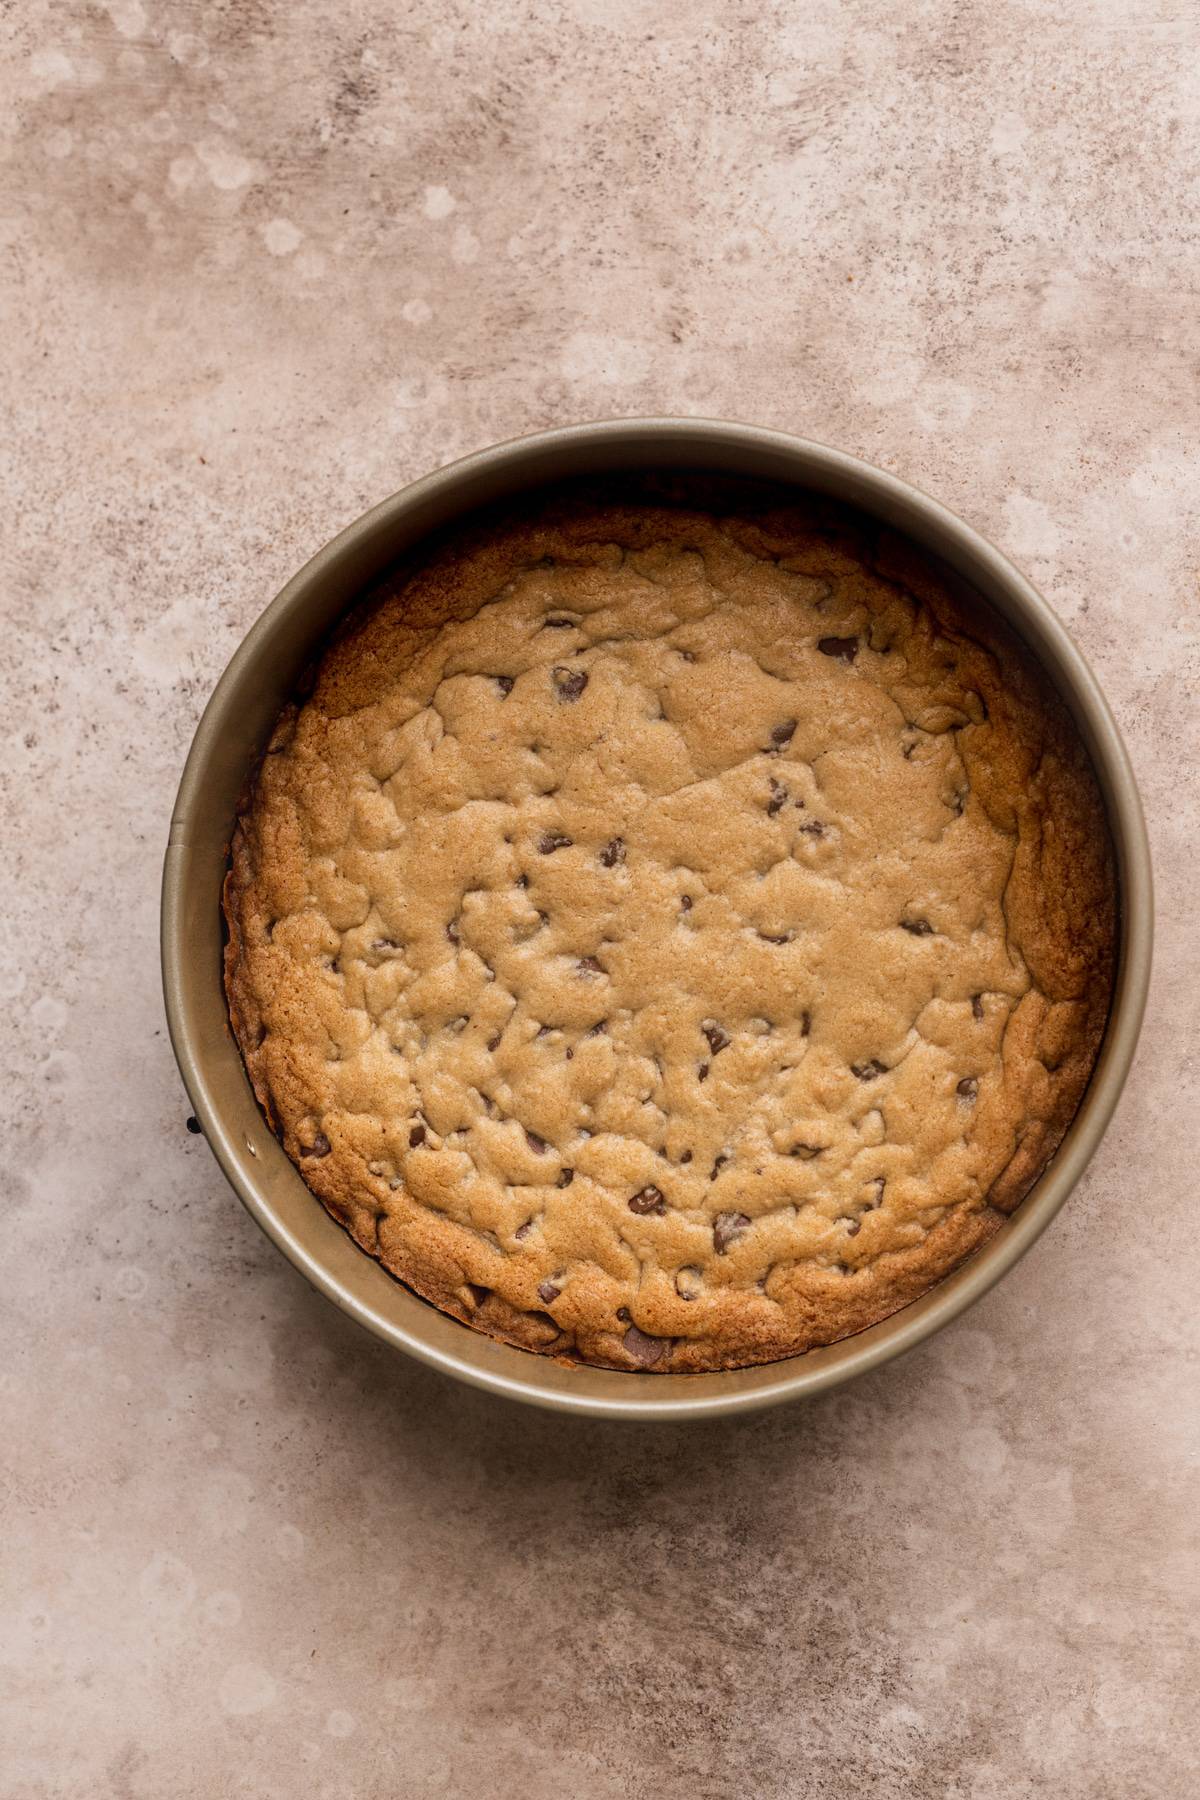 Cookie crust in a springform pan.